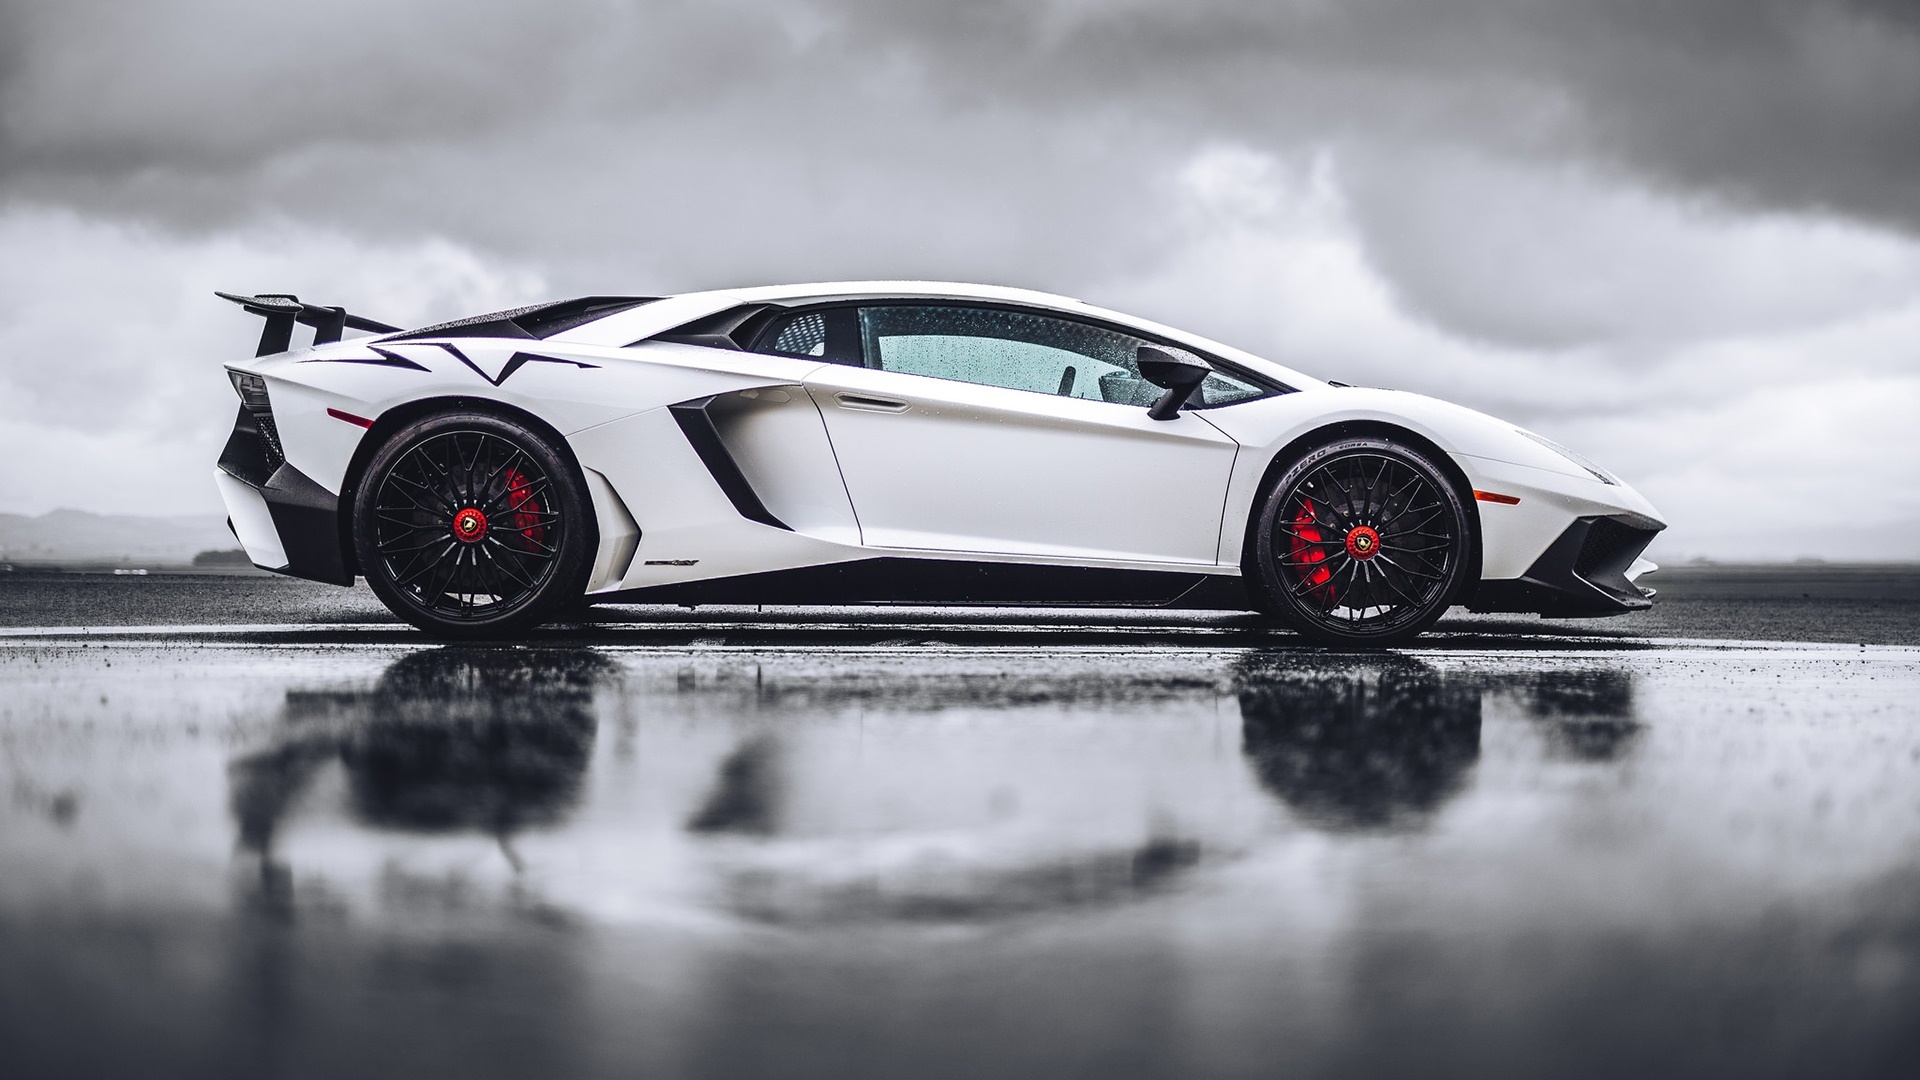 Télécharger des fonds d'écran Lamborghini Aventador Sv HD